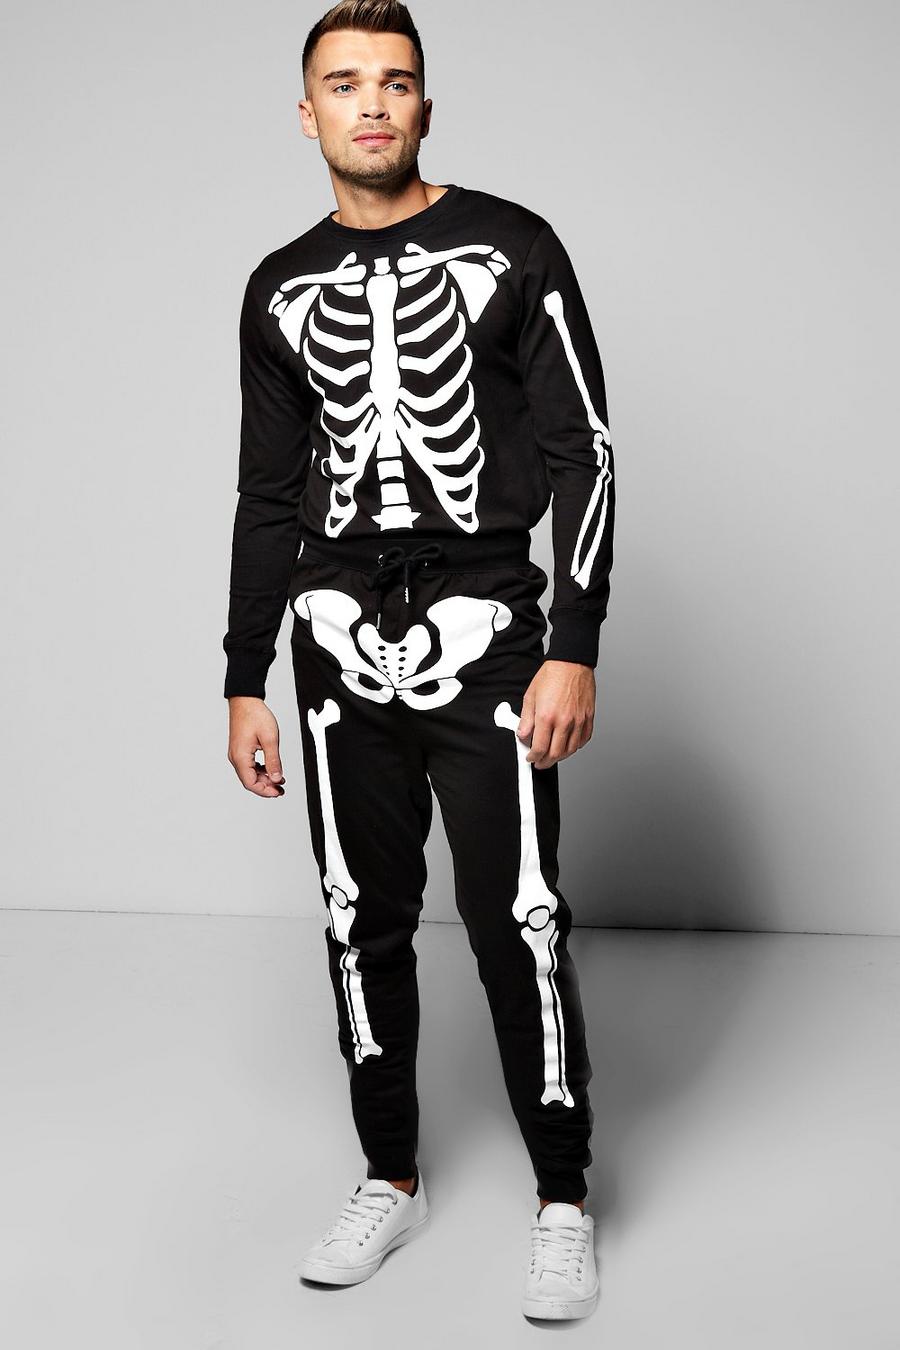 chándal con estampado de esqueleto para halloween, Negro image number 1